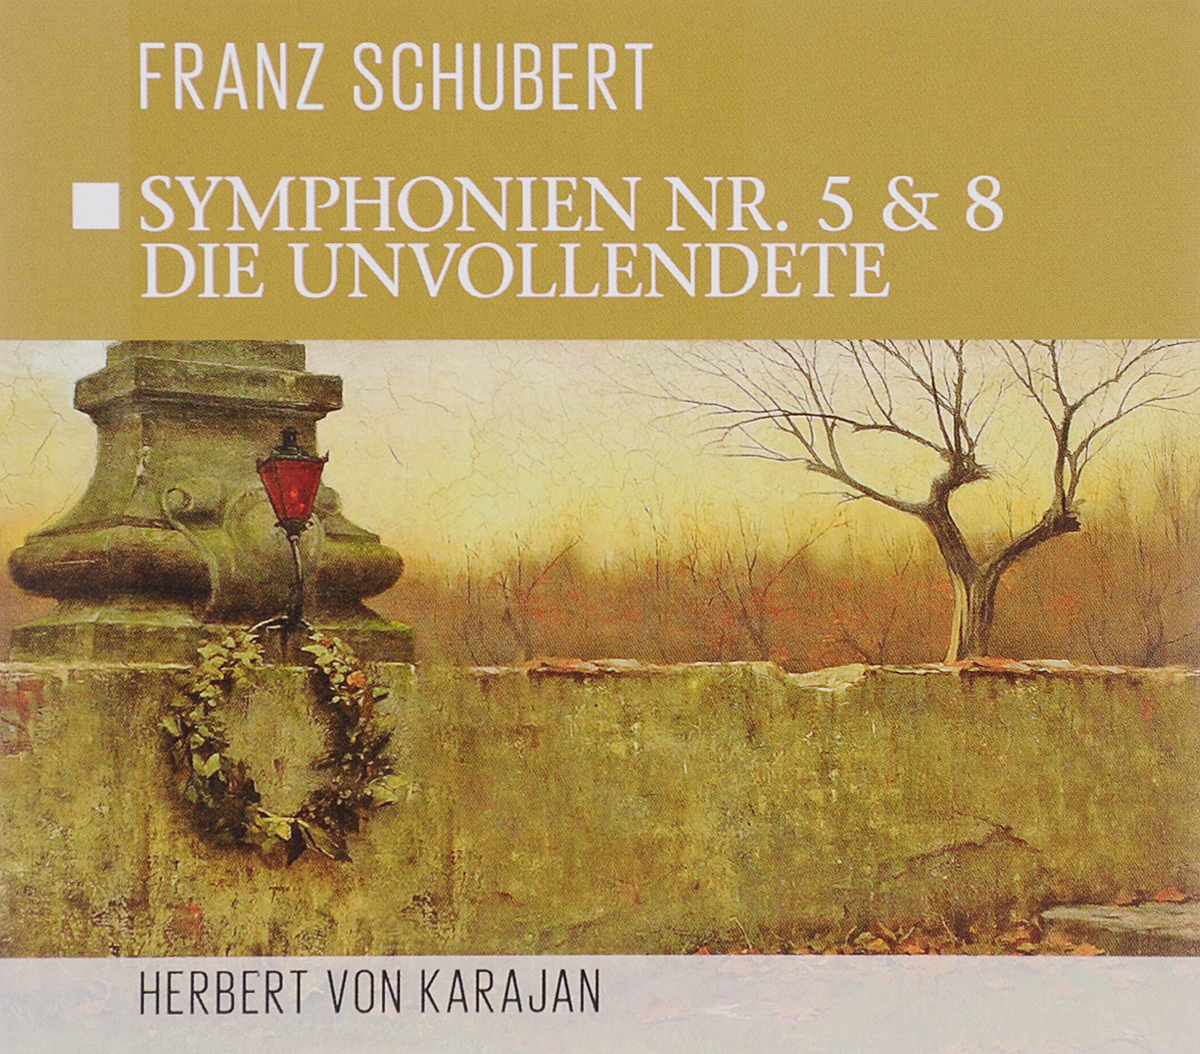 Herbert Von Karajan. Franz Schubert. Symphonien Nr. 5 & Nr. 8. 